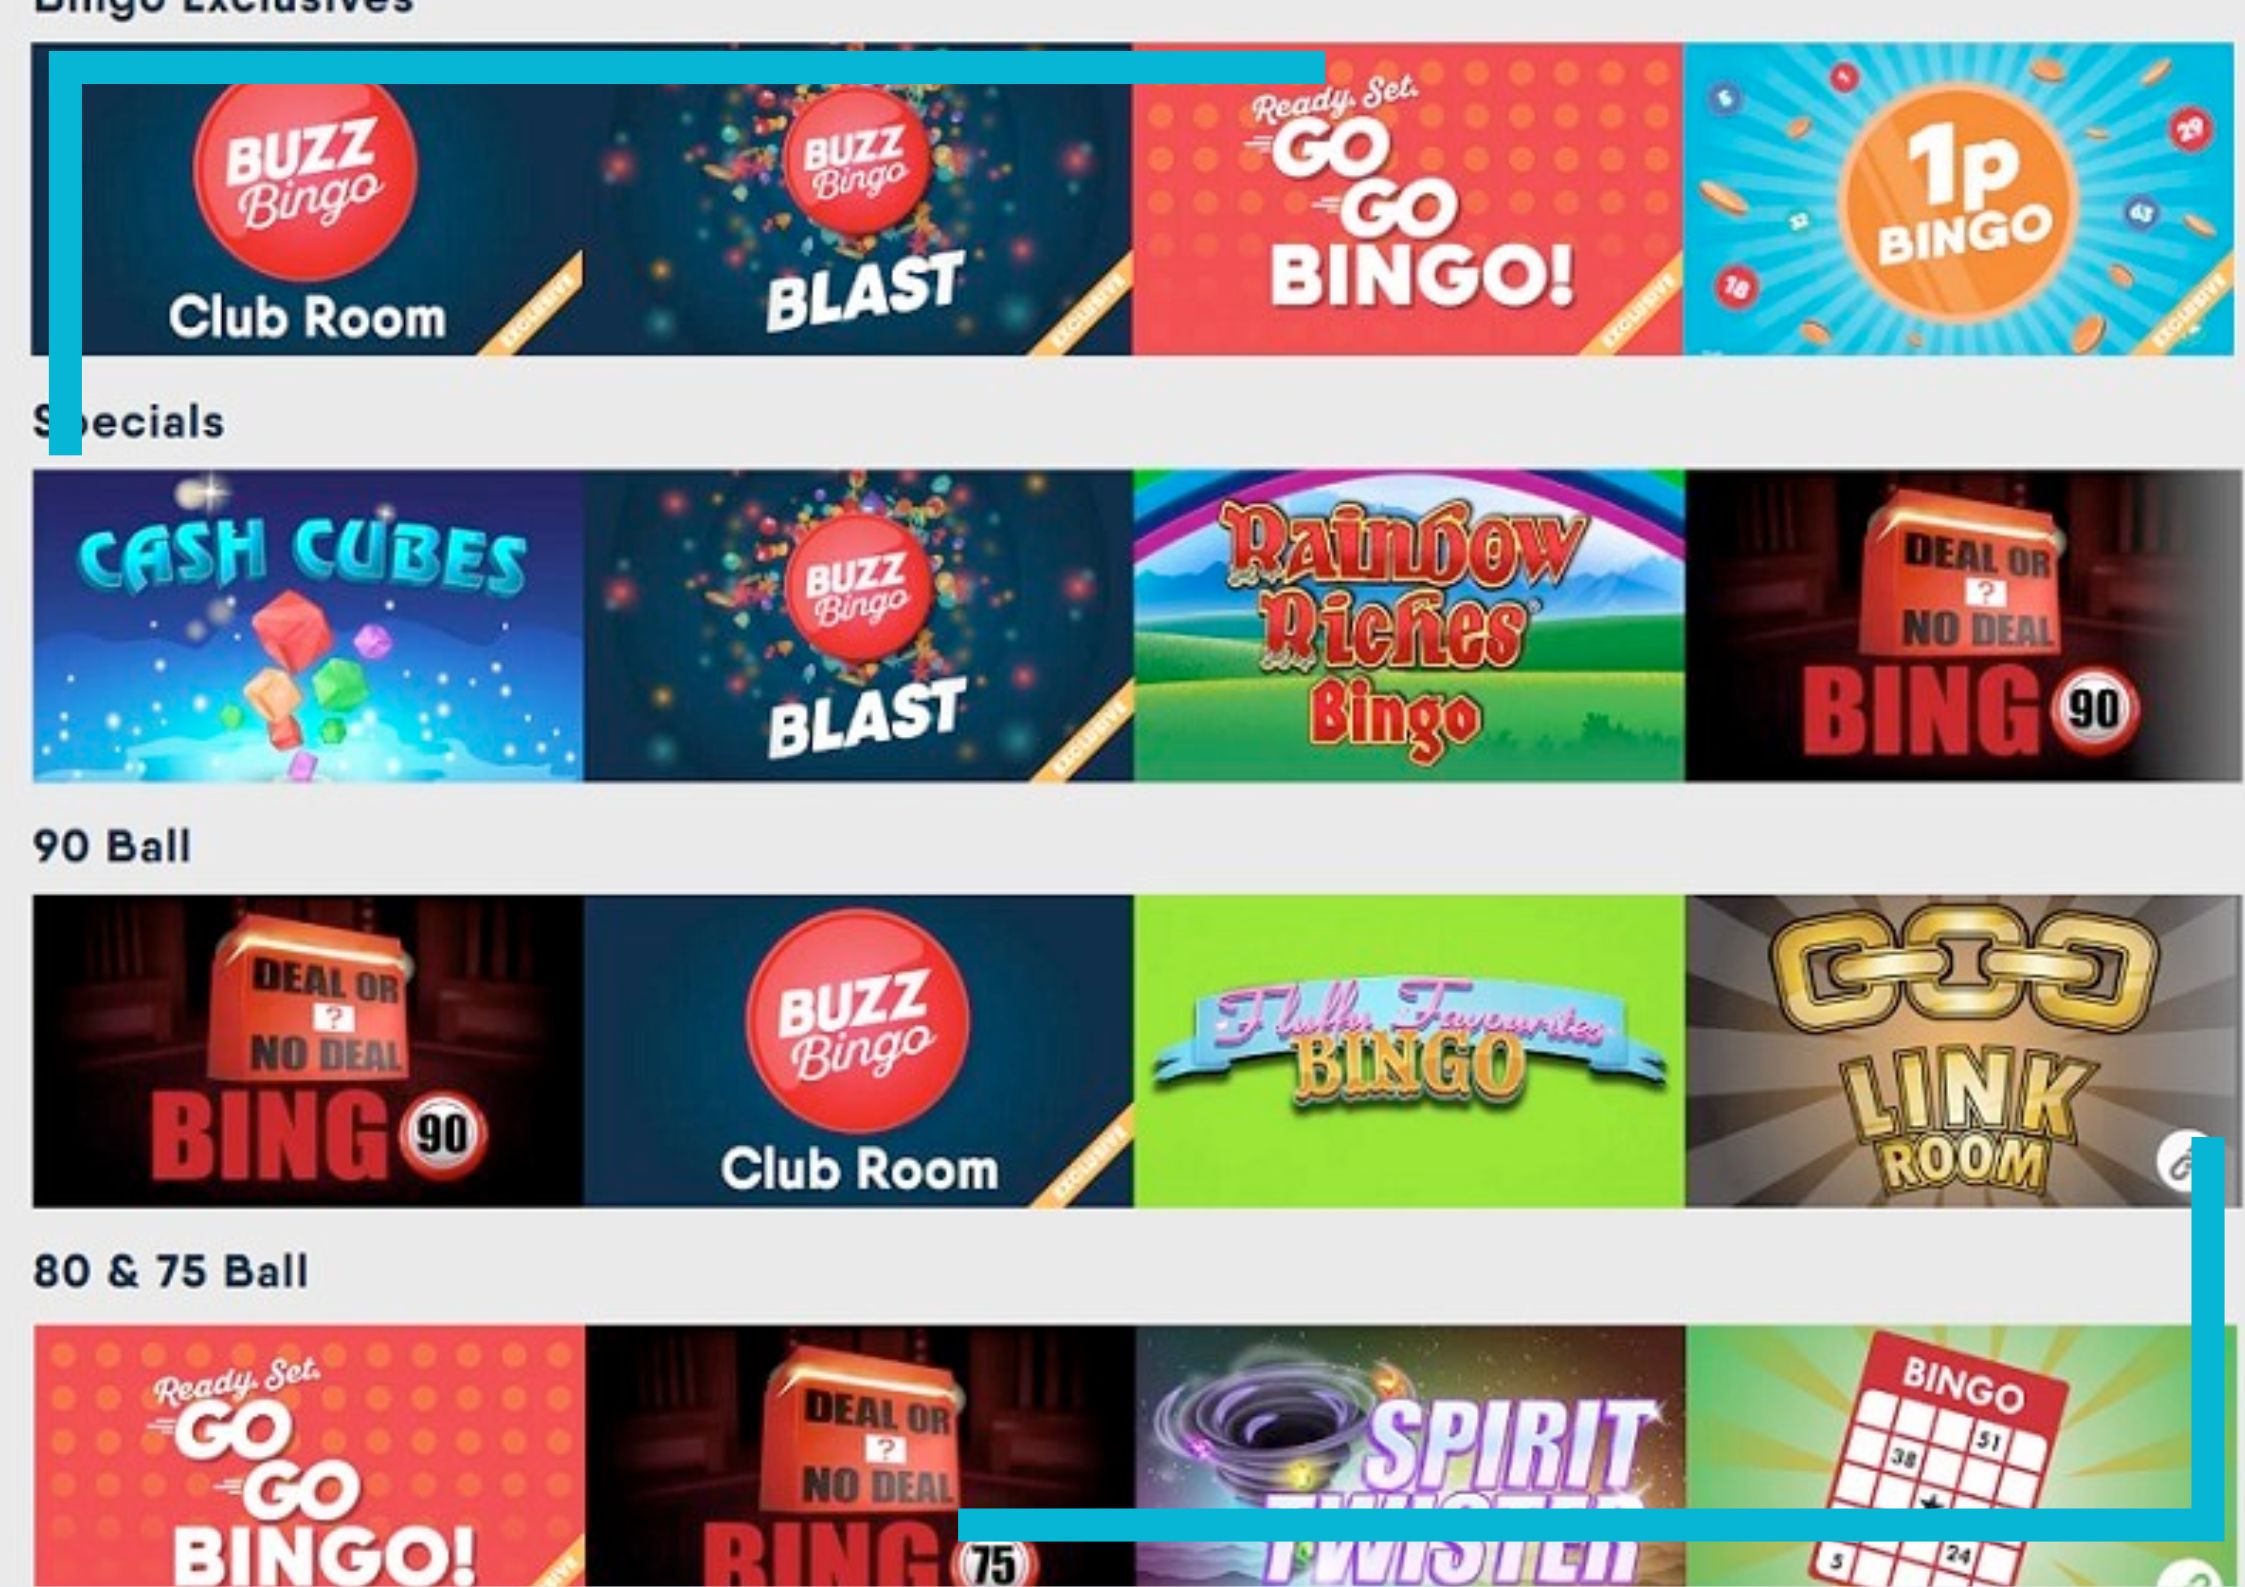 Buzz bingo Casino Game